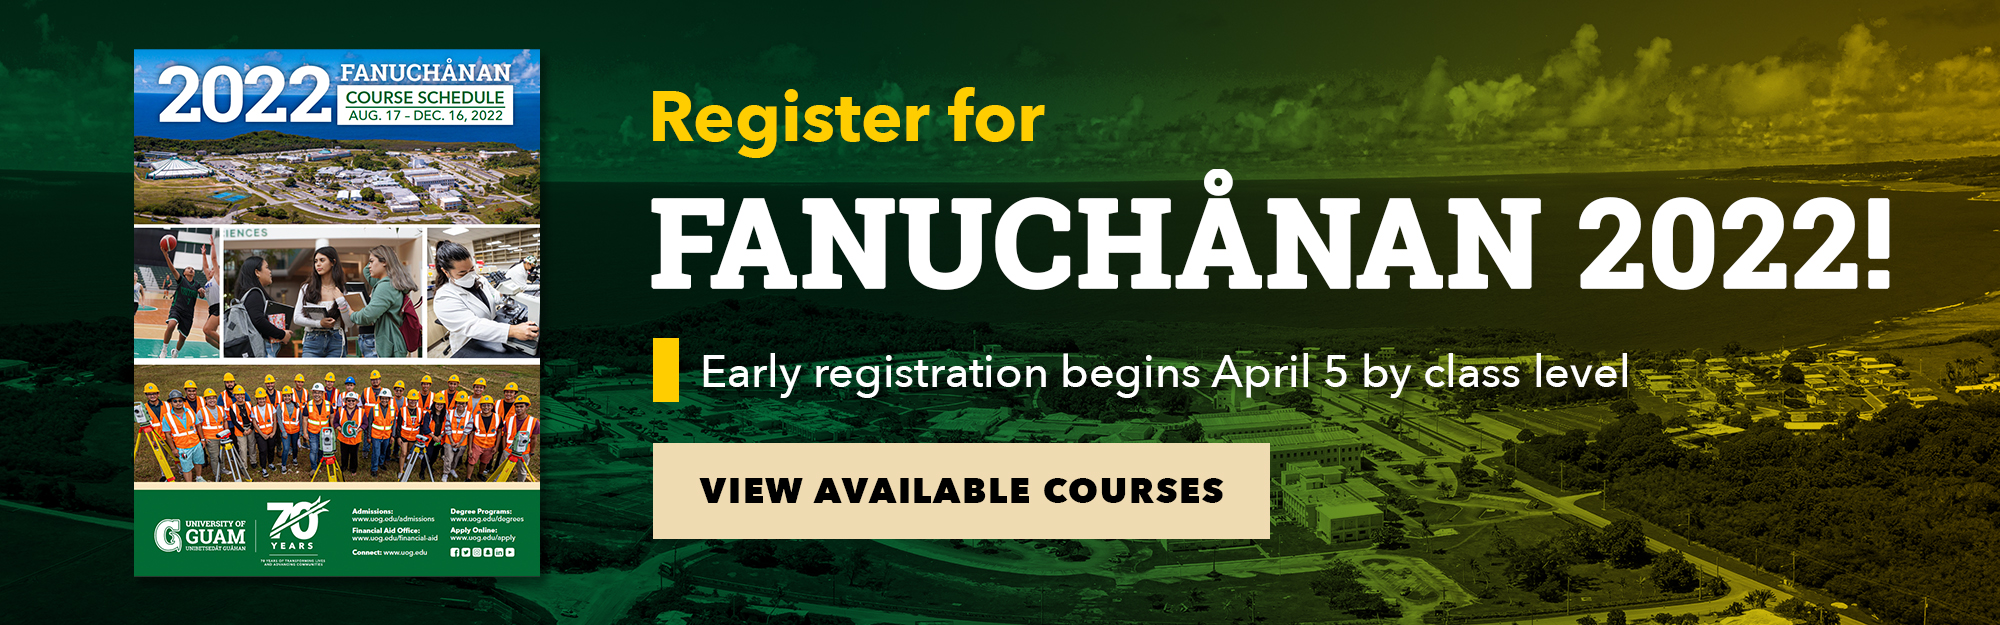 Fanuchanan 2022 Course Schedule